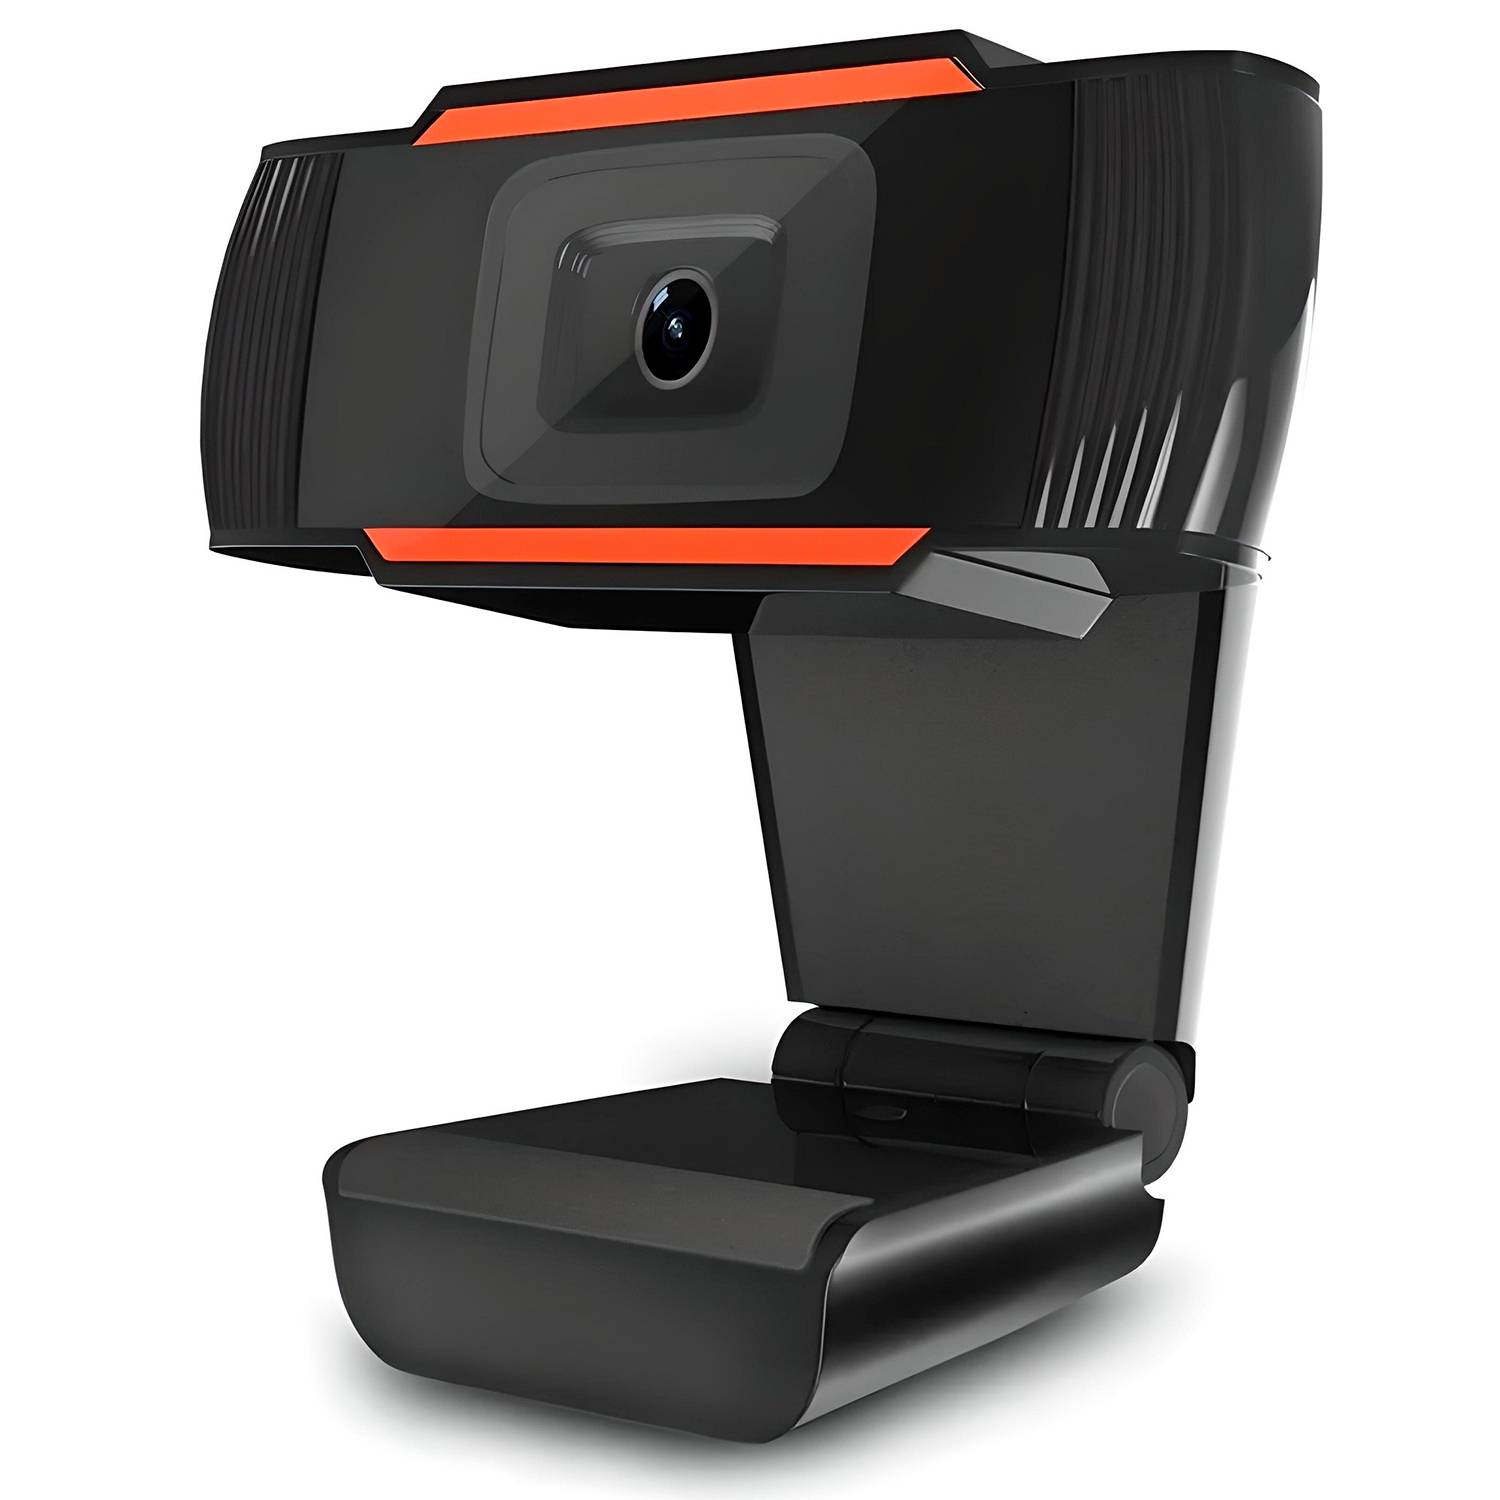 Cámara Web Full HD 1080p USB con Micrófono Webcam PC Laptop